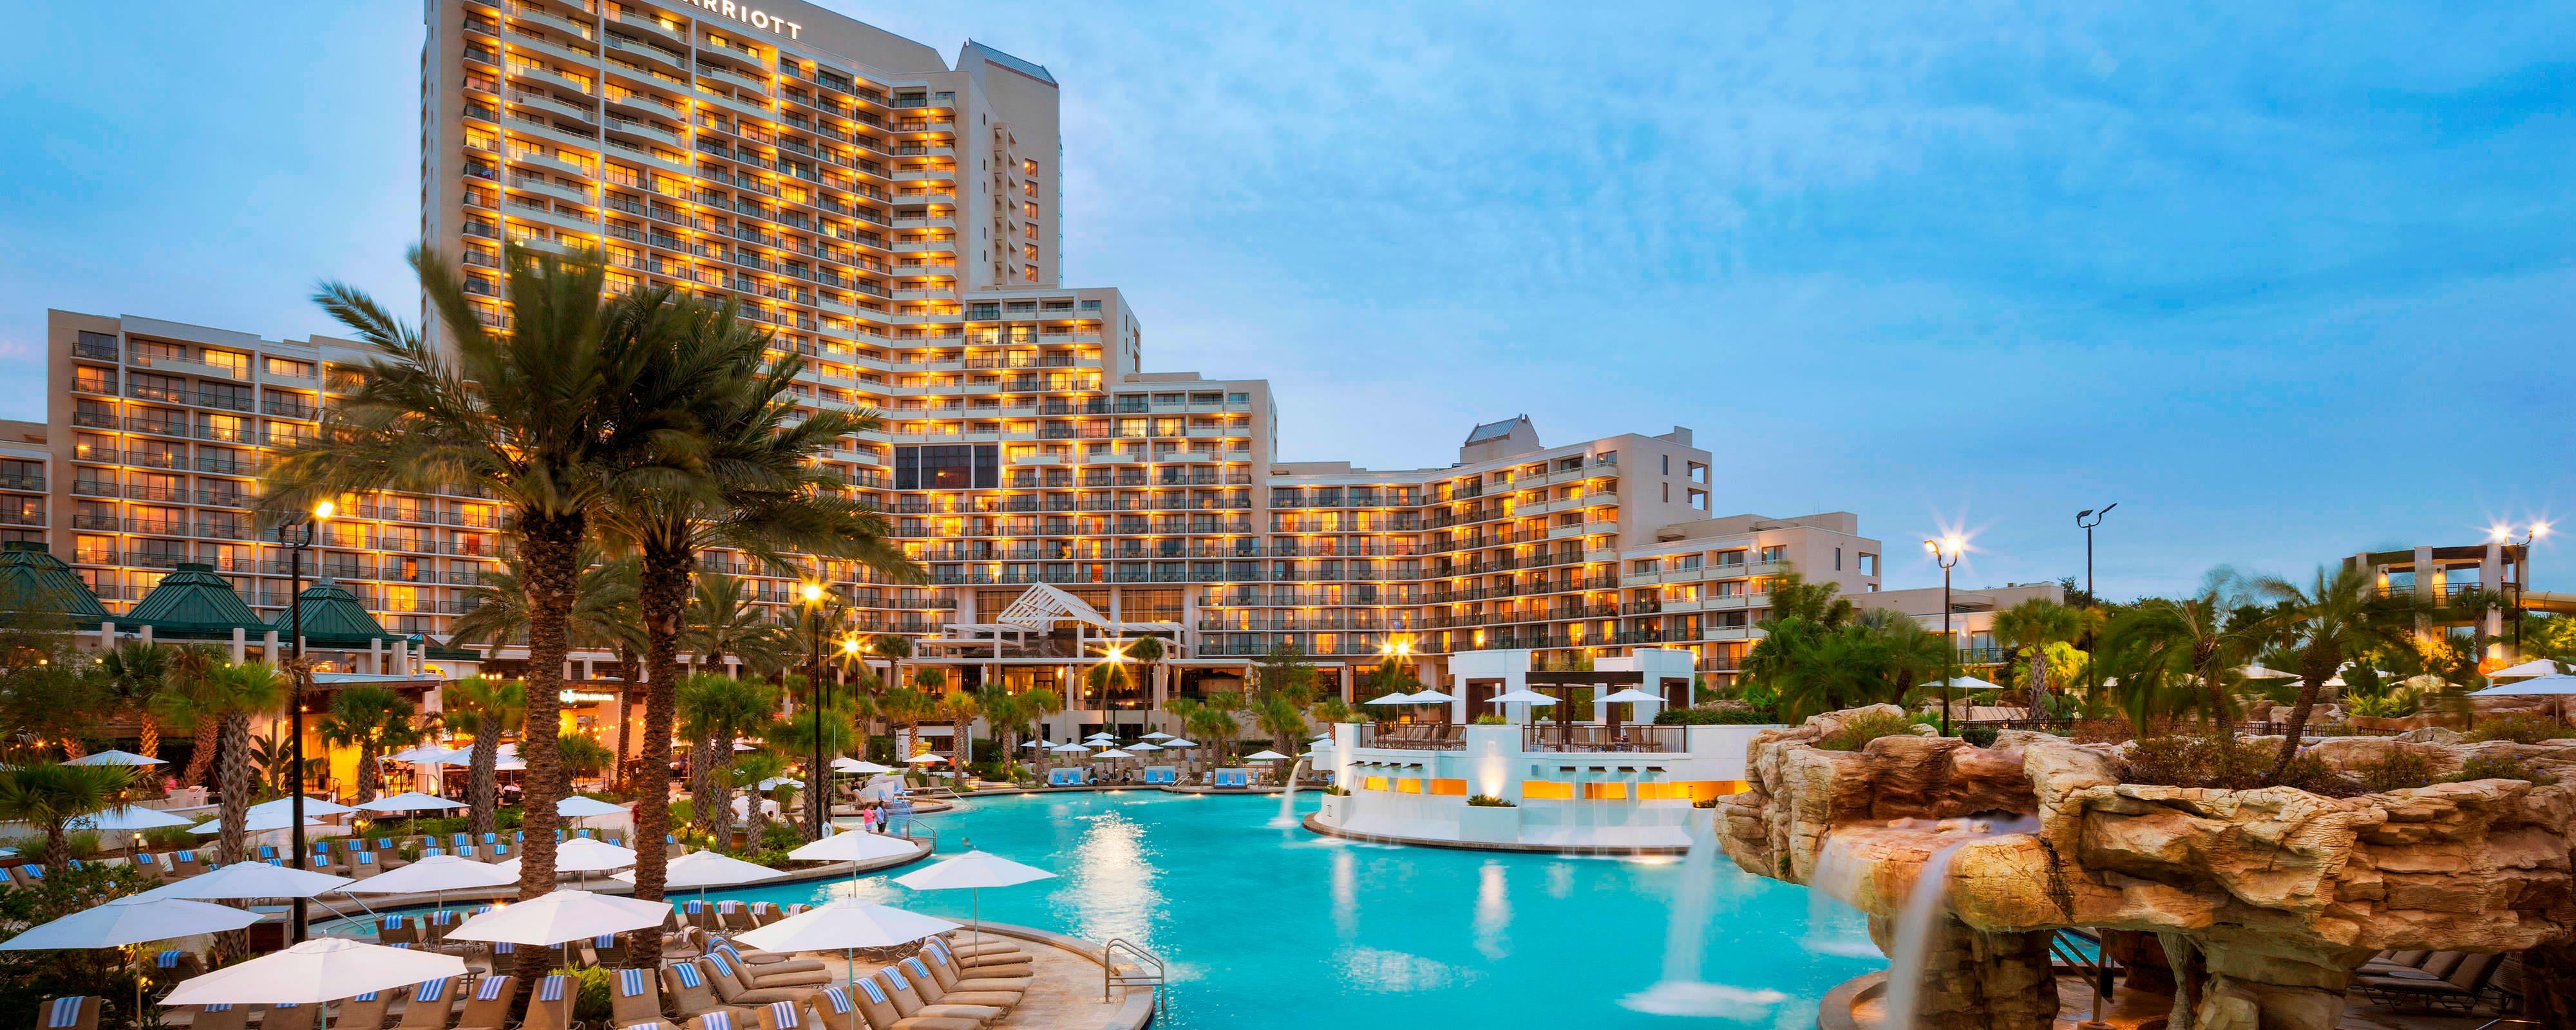 Orlando, Florida Resort - Hotel | Orlando World Center Marriott